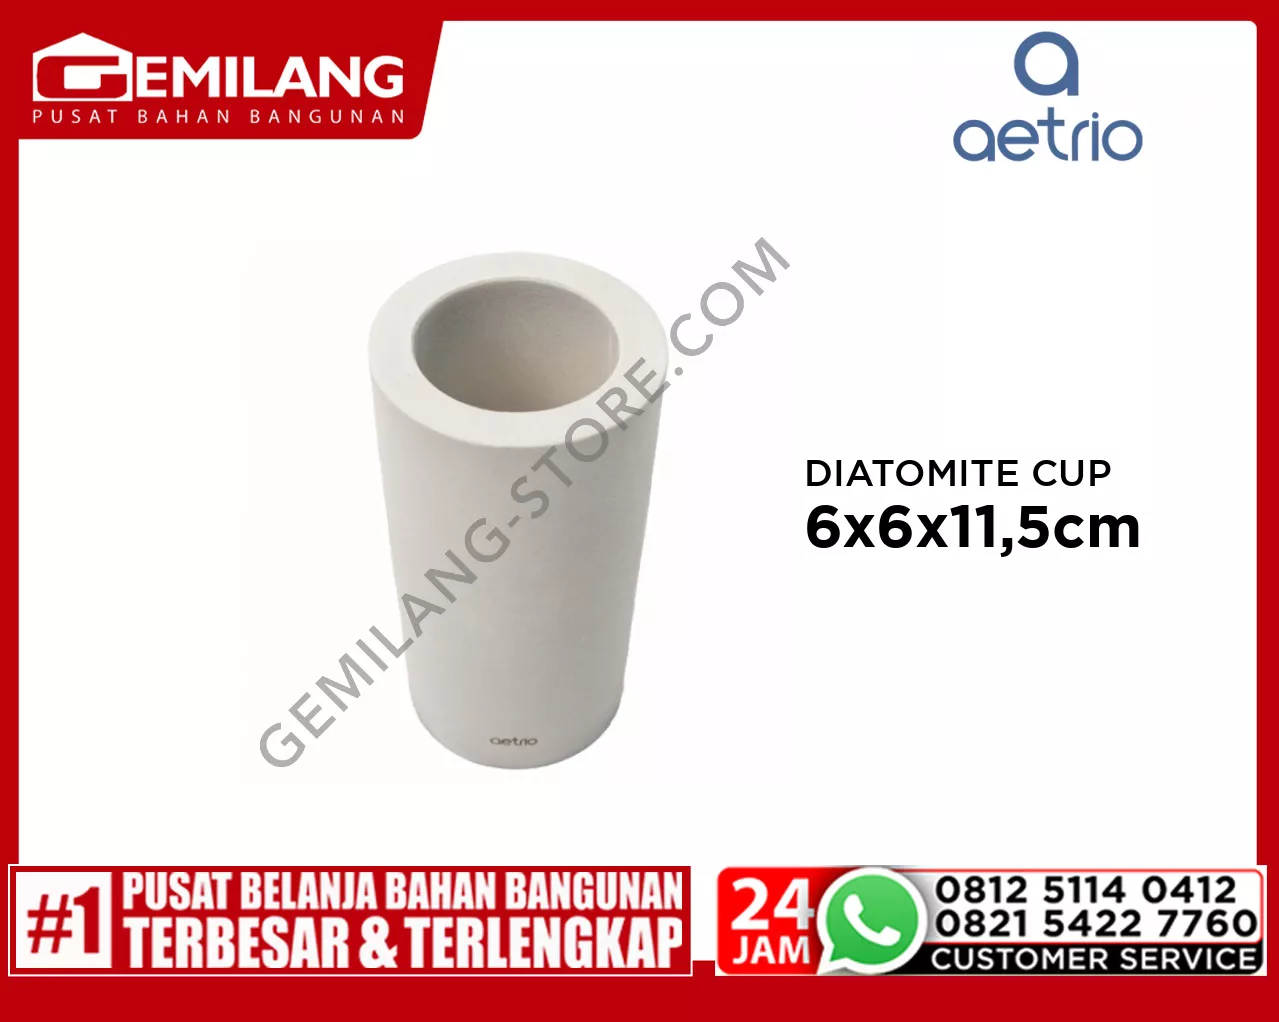 AETRIO DIATOMITE CUP LIGHT GREY 60 x 60 x 115mm